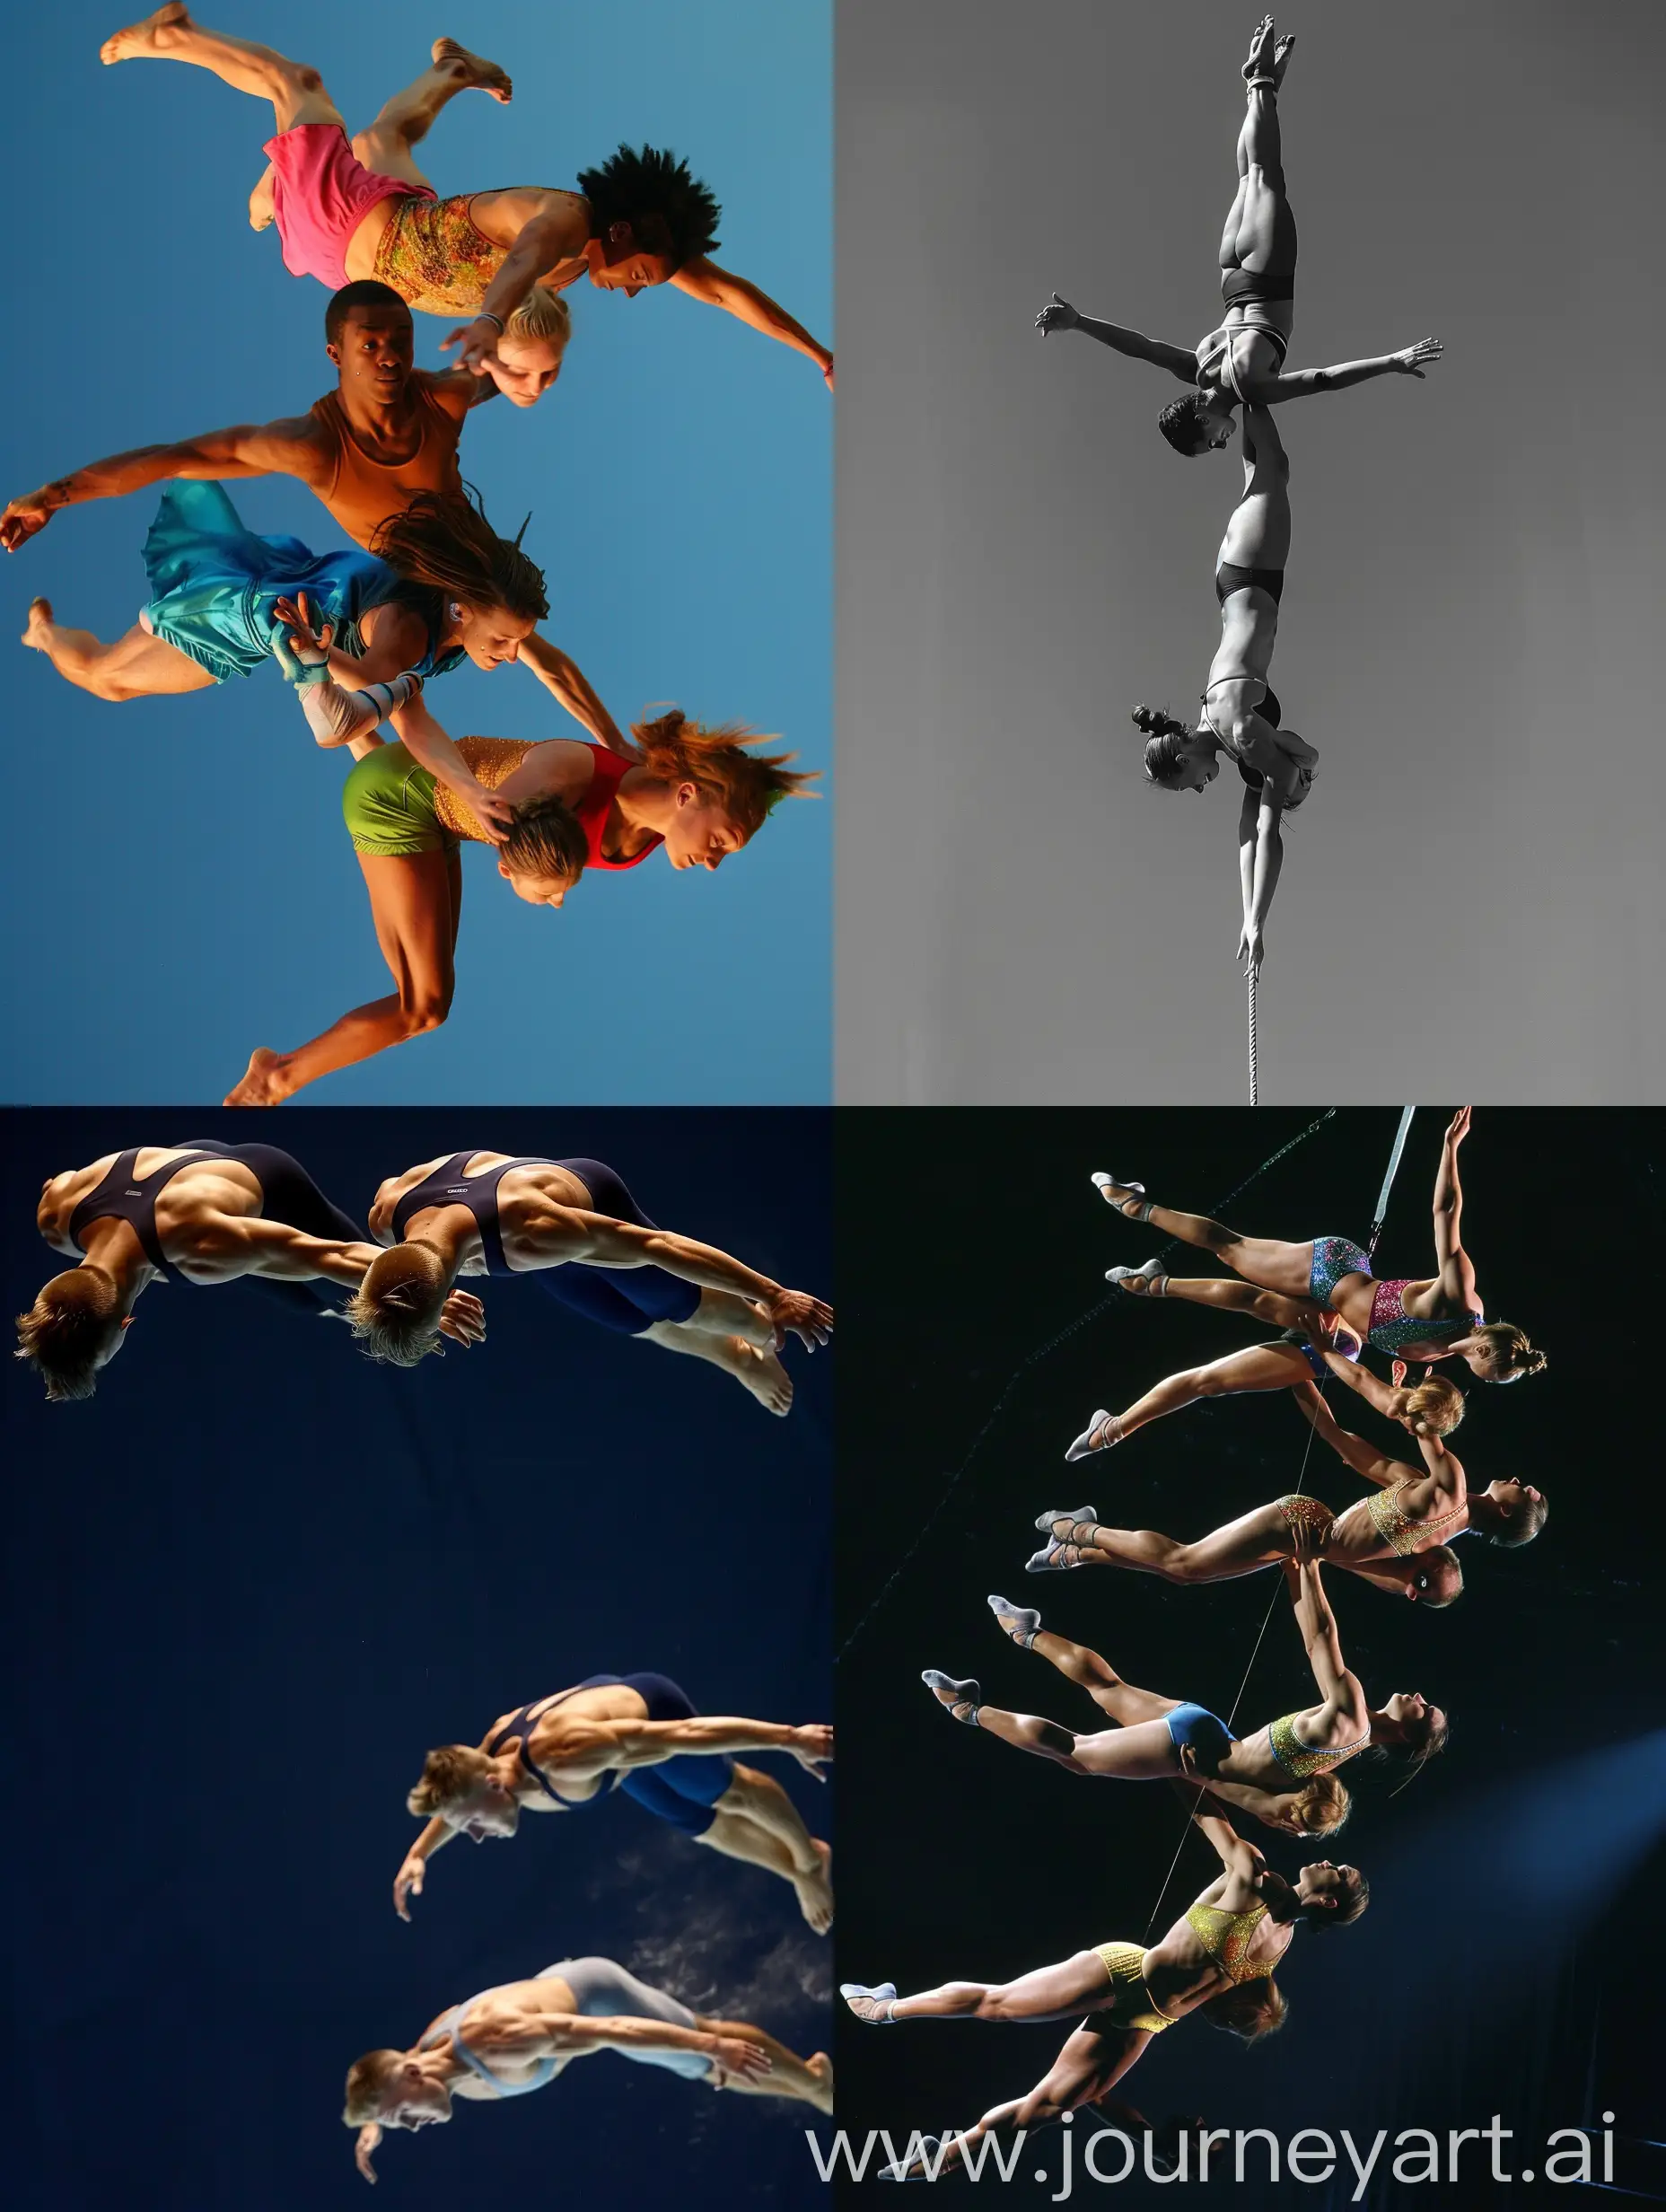 Gymnasts perform acrobatic tricks